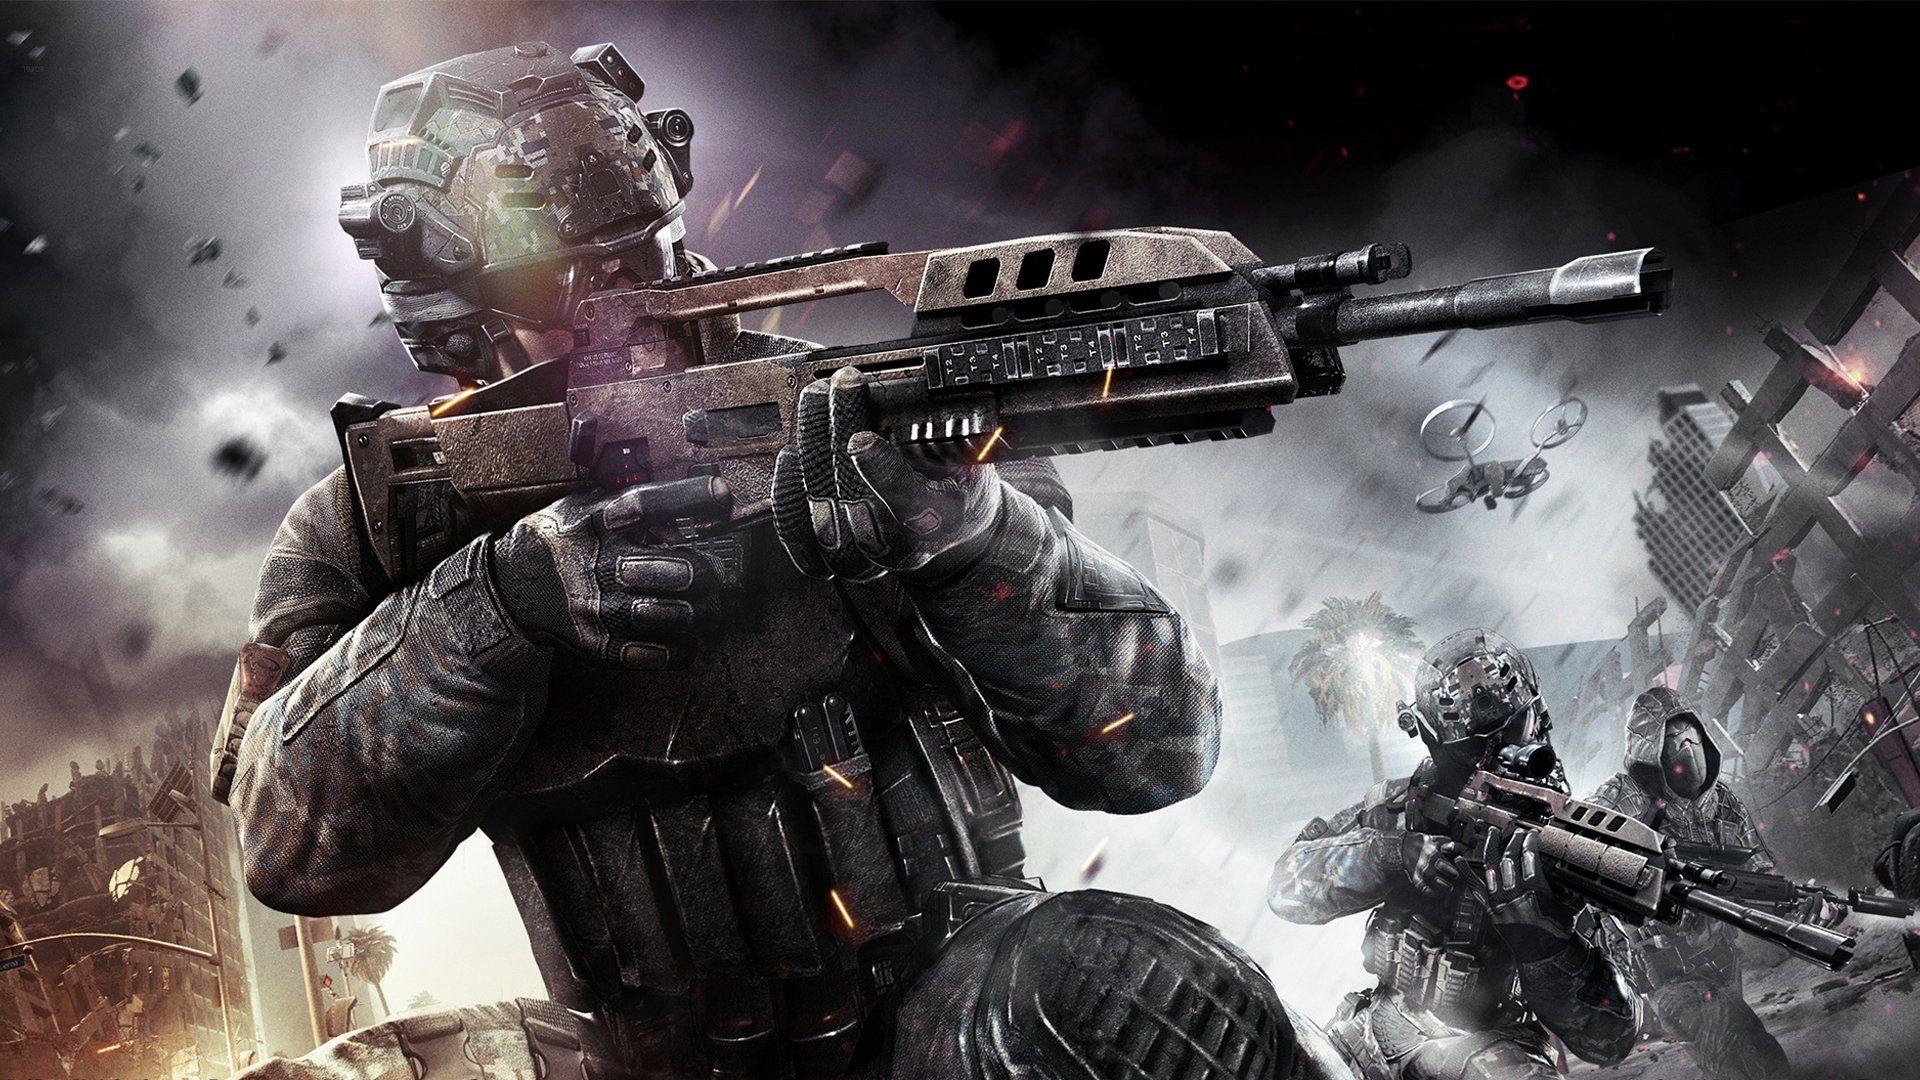 Call of Duty HD Wallpaper